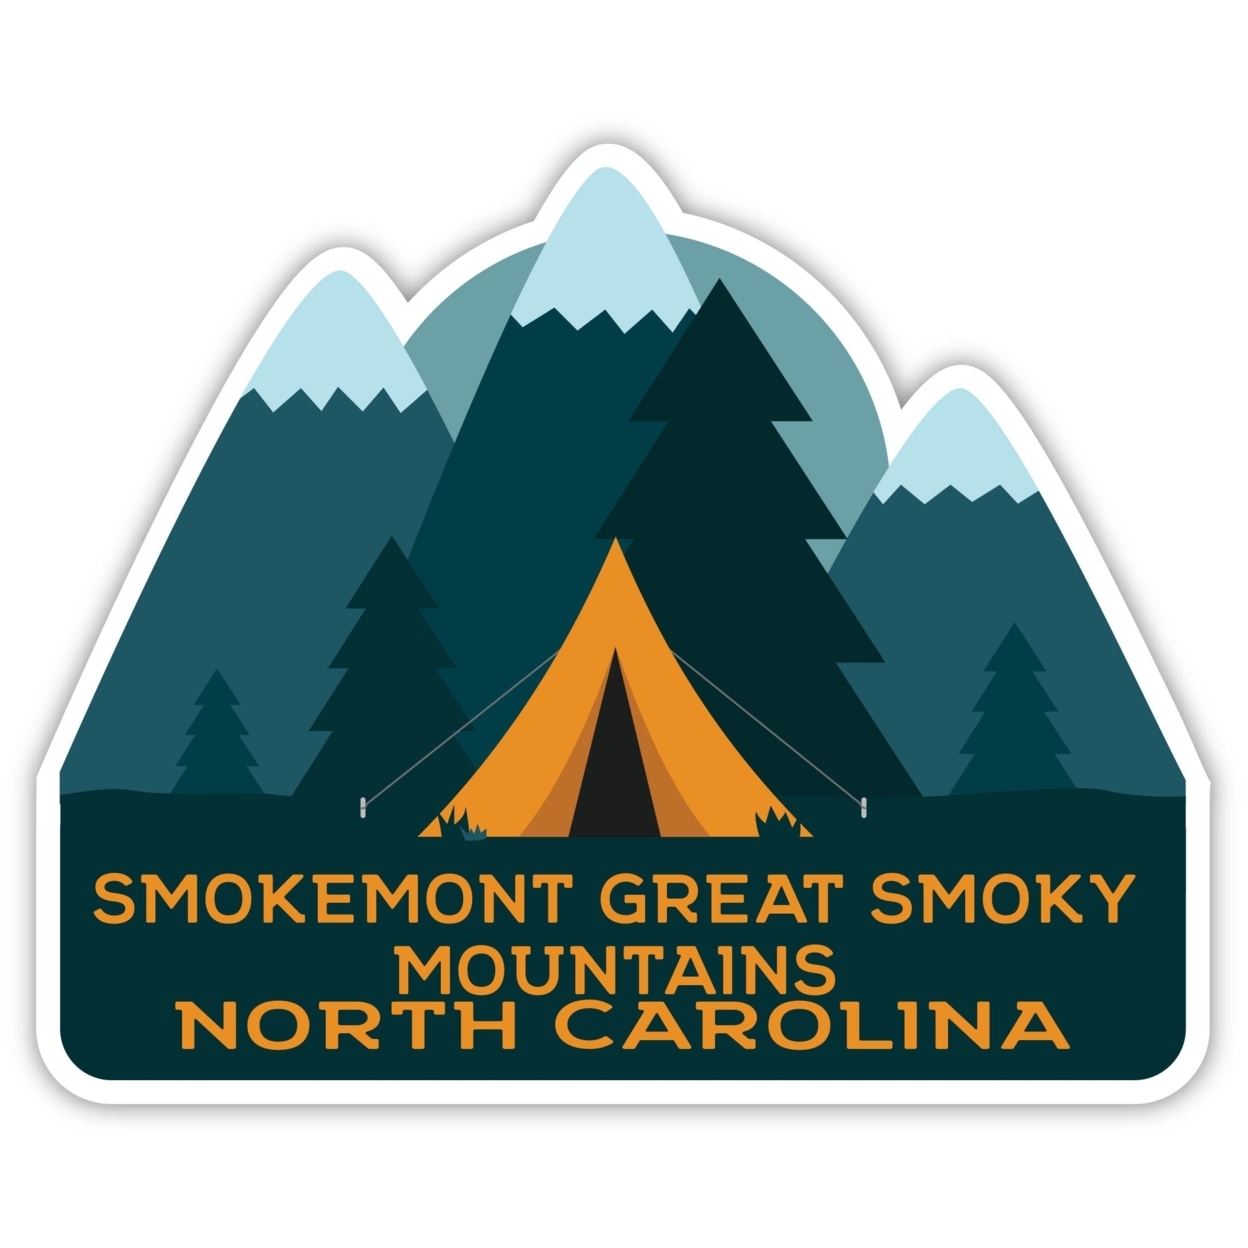 Smokemont Great Smoky Mountains North Carolina Souvenir Decorative Stickers (Choose Theme And Size) - Single Unit, 4-Inch, Tent